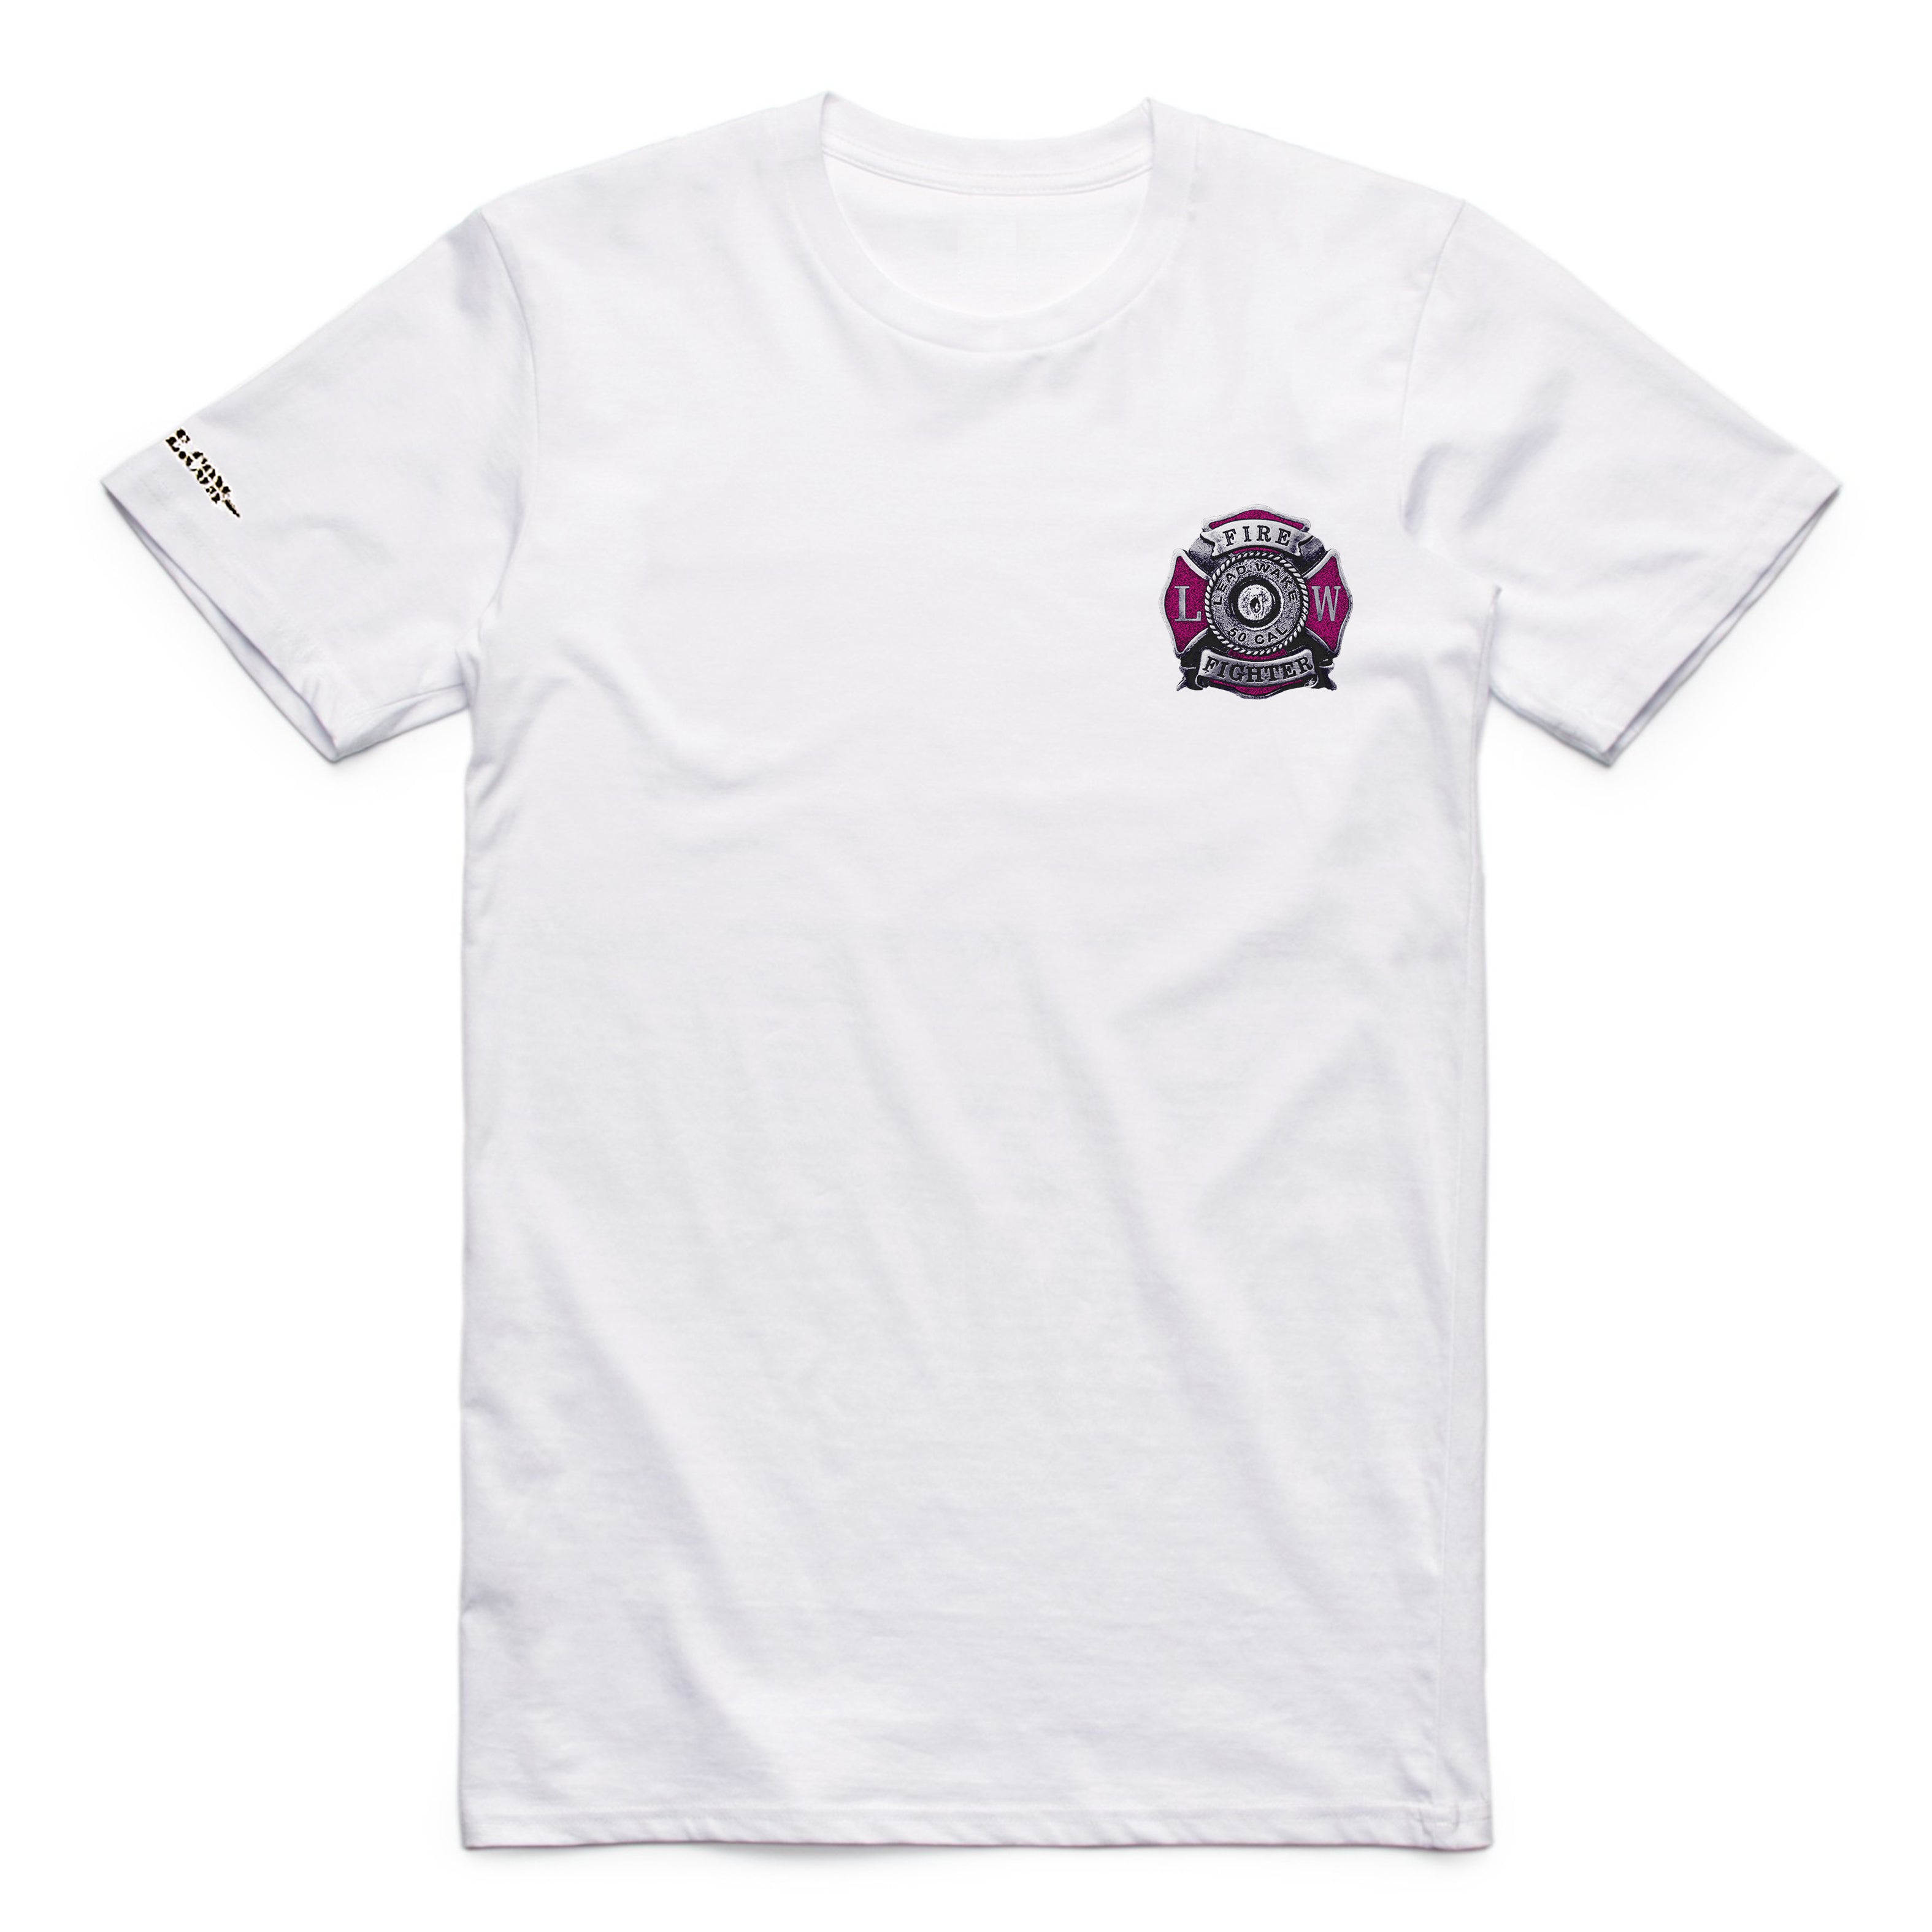 Men's Breast Cancer Awareness T-Shirt in White